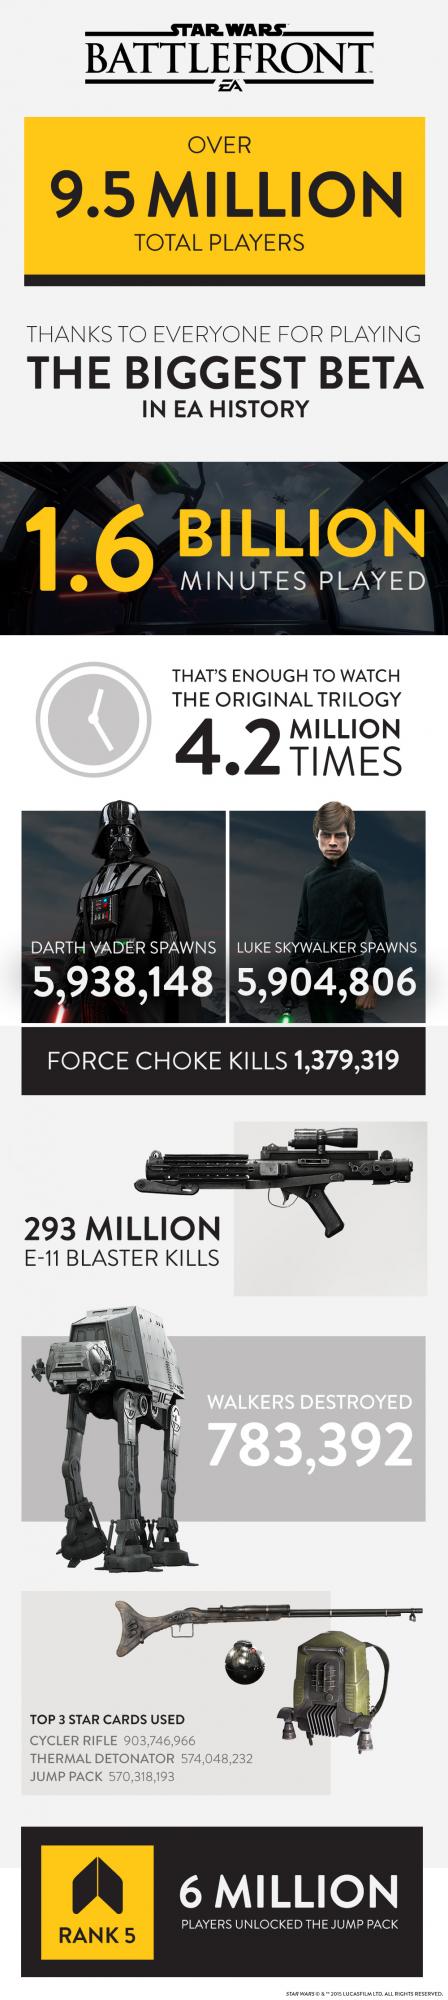 star-wars-battlefront-infographic.jpg